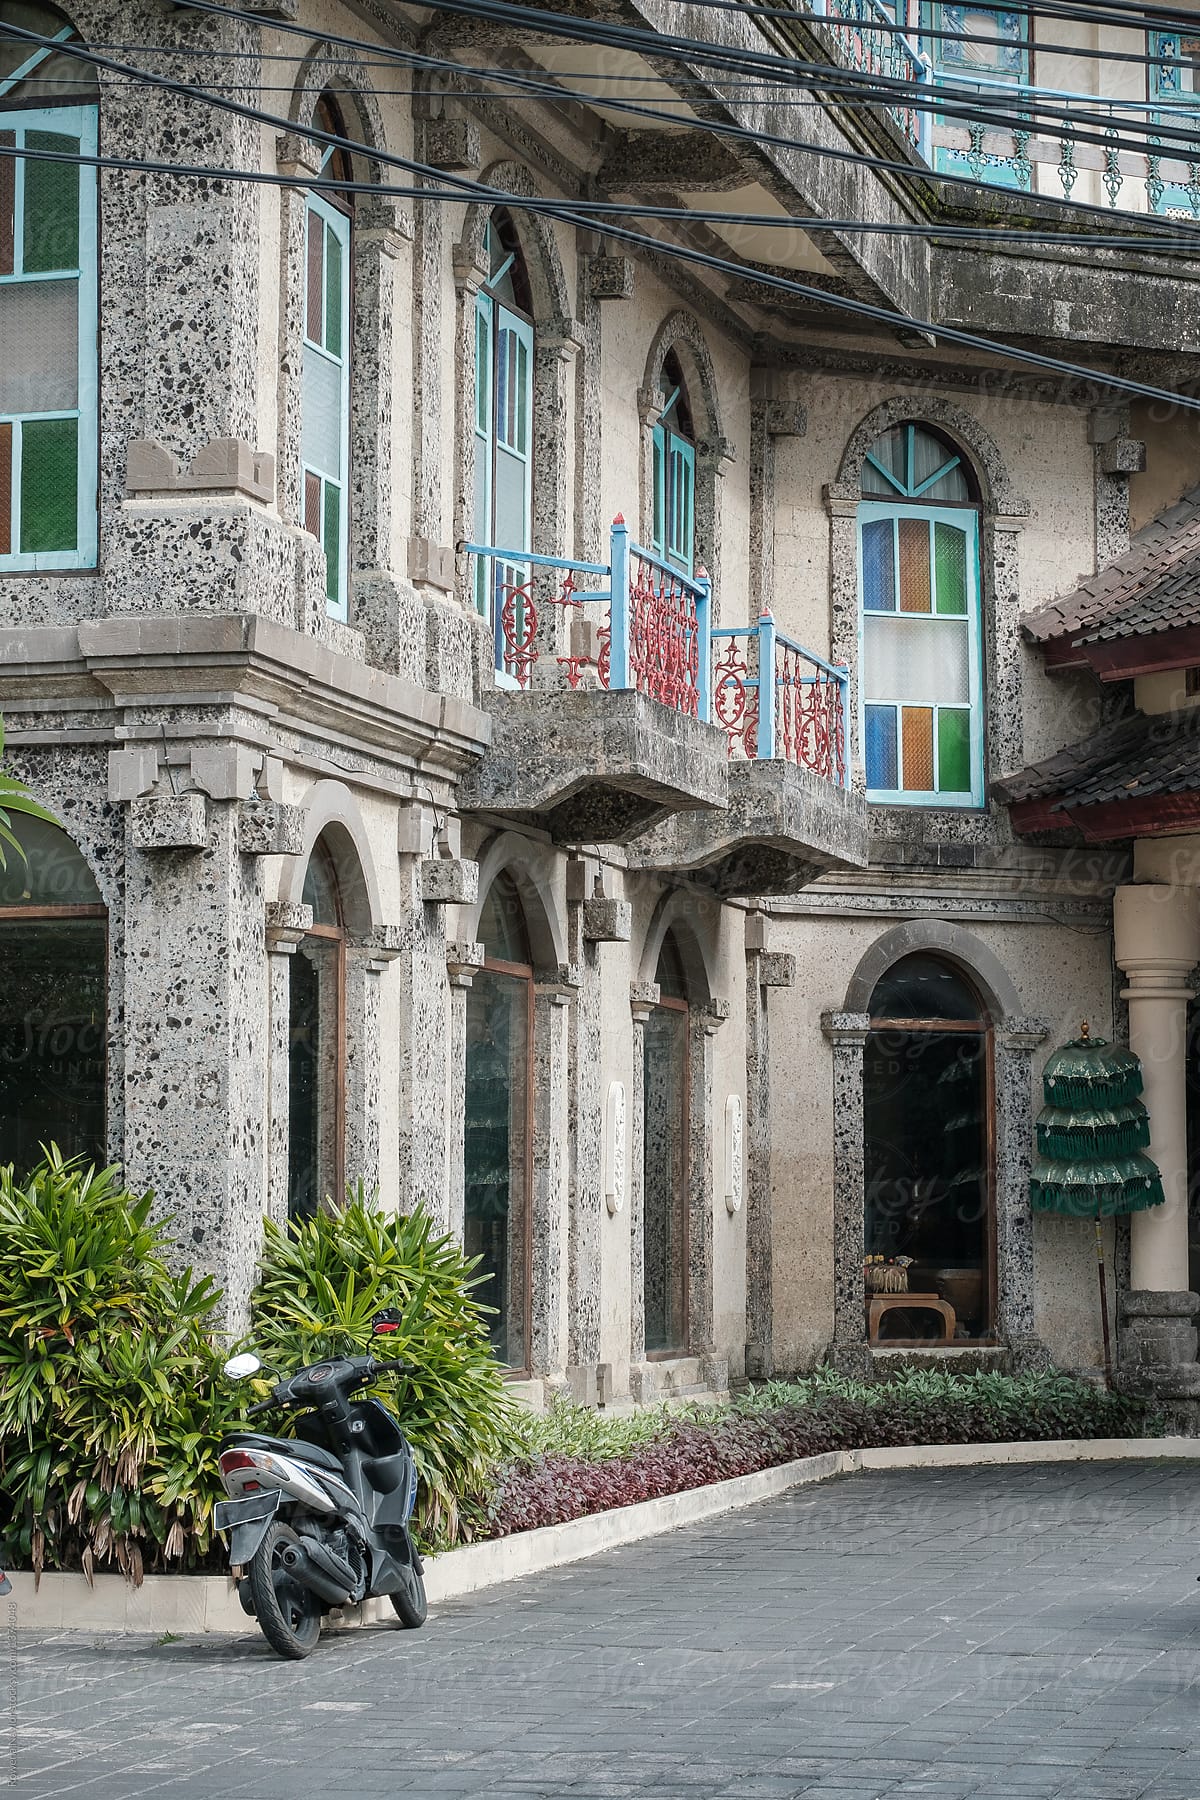 Heritage Architecture on Bali Street